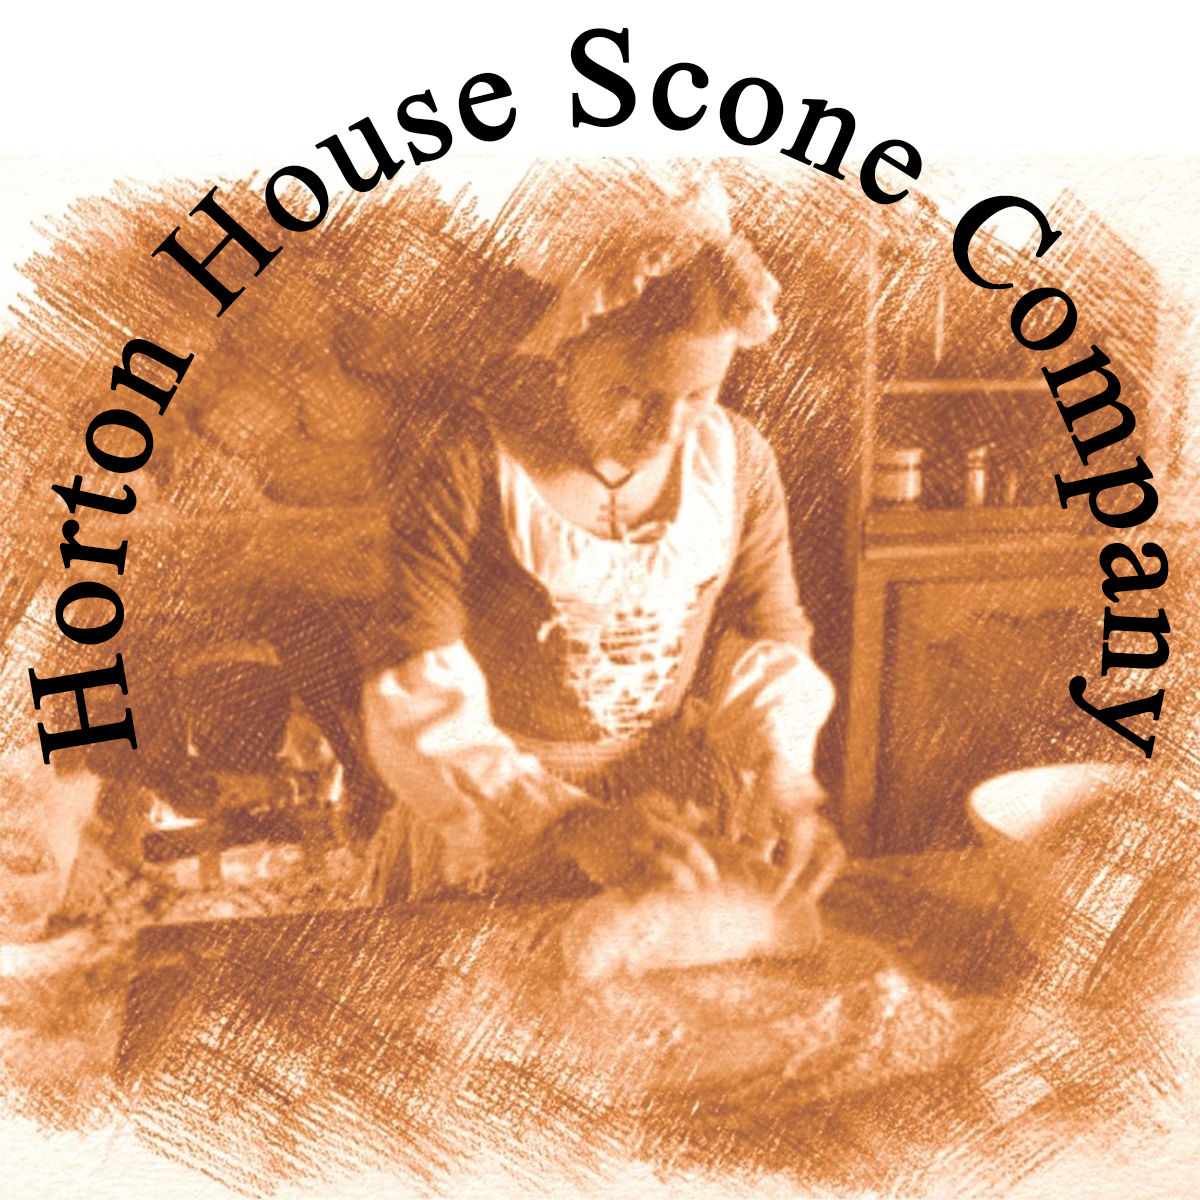 HORTON HOUSE SCONES